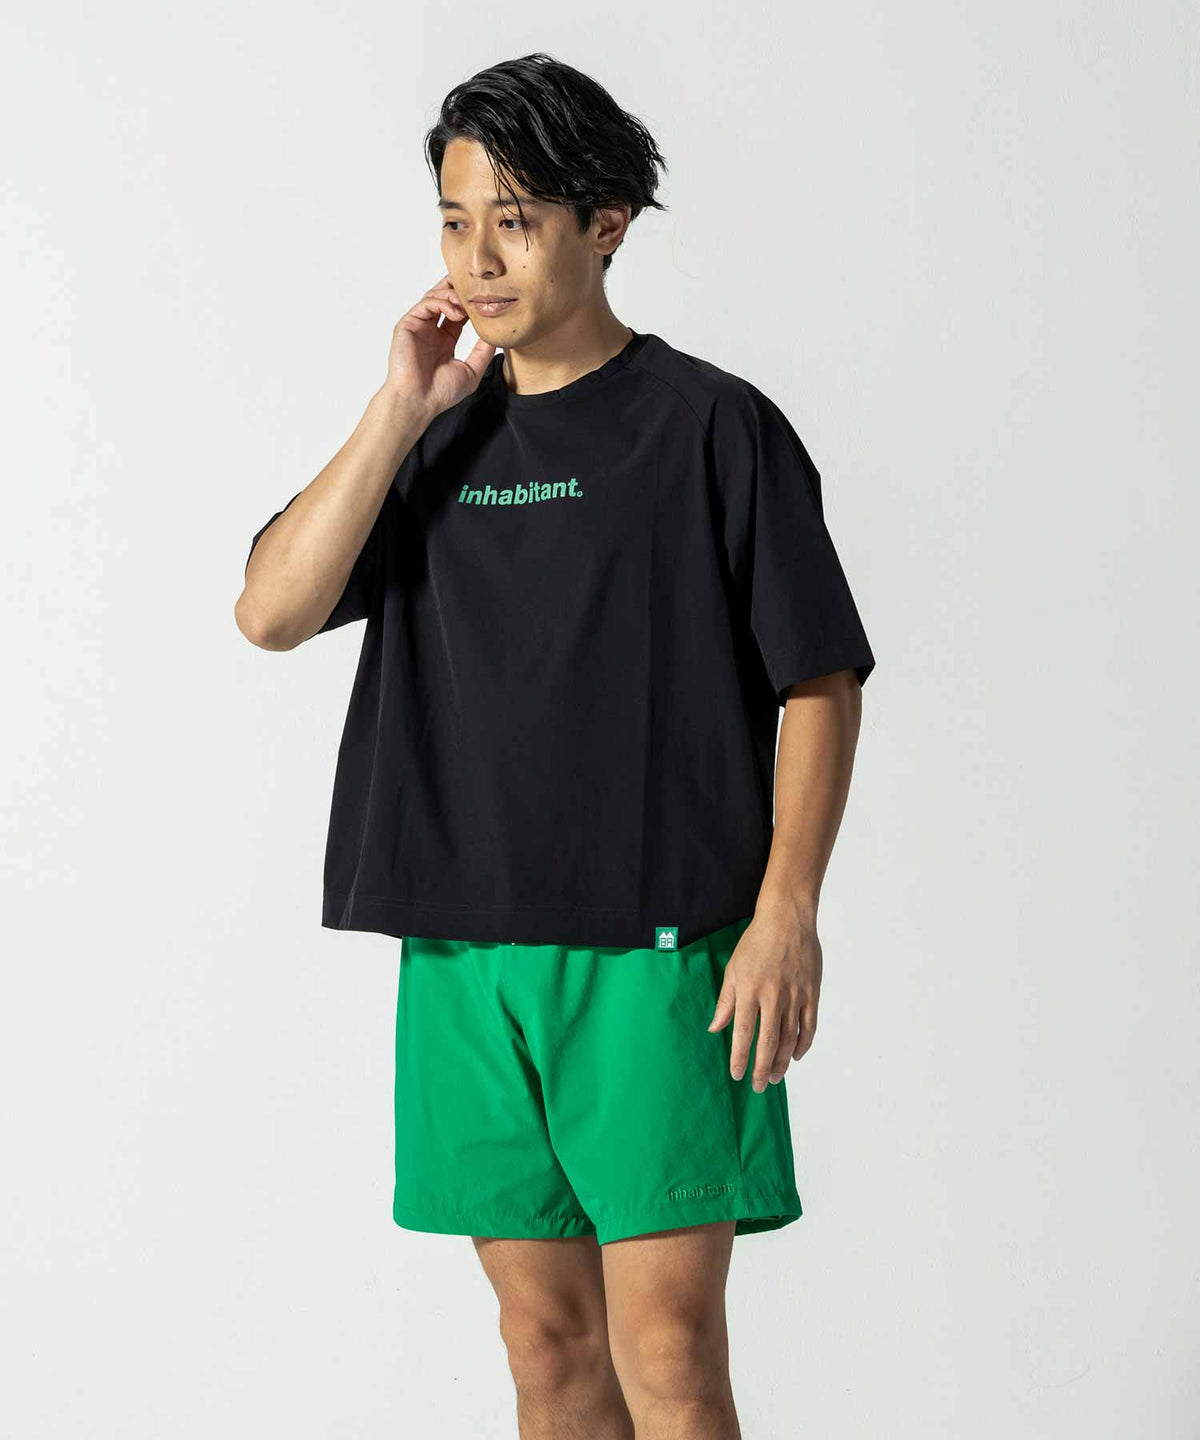 【MENS】Rash T-shirts ラッシュTシャツ ラッシュガード カジュアルファッション サーフィン レジャー スケートボード inhabitant(インハビタント)